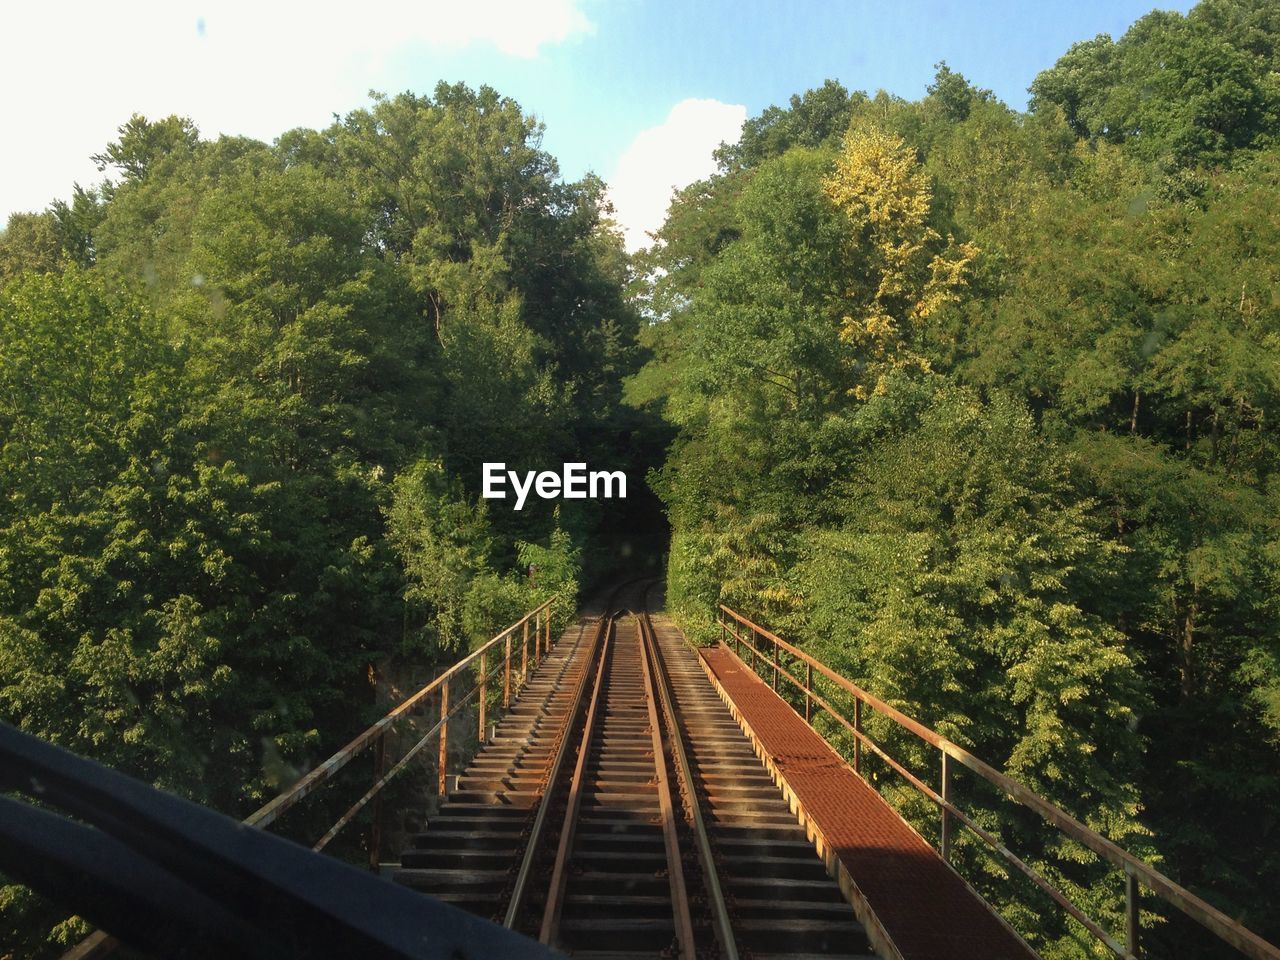 Railway bridge amidst trees seen through train windshield